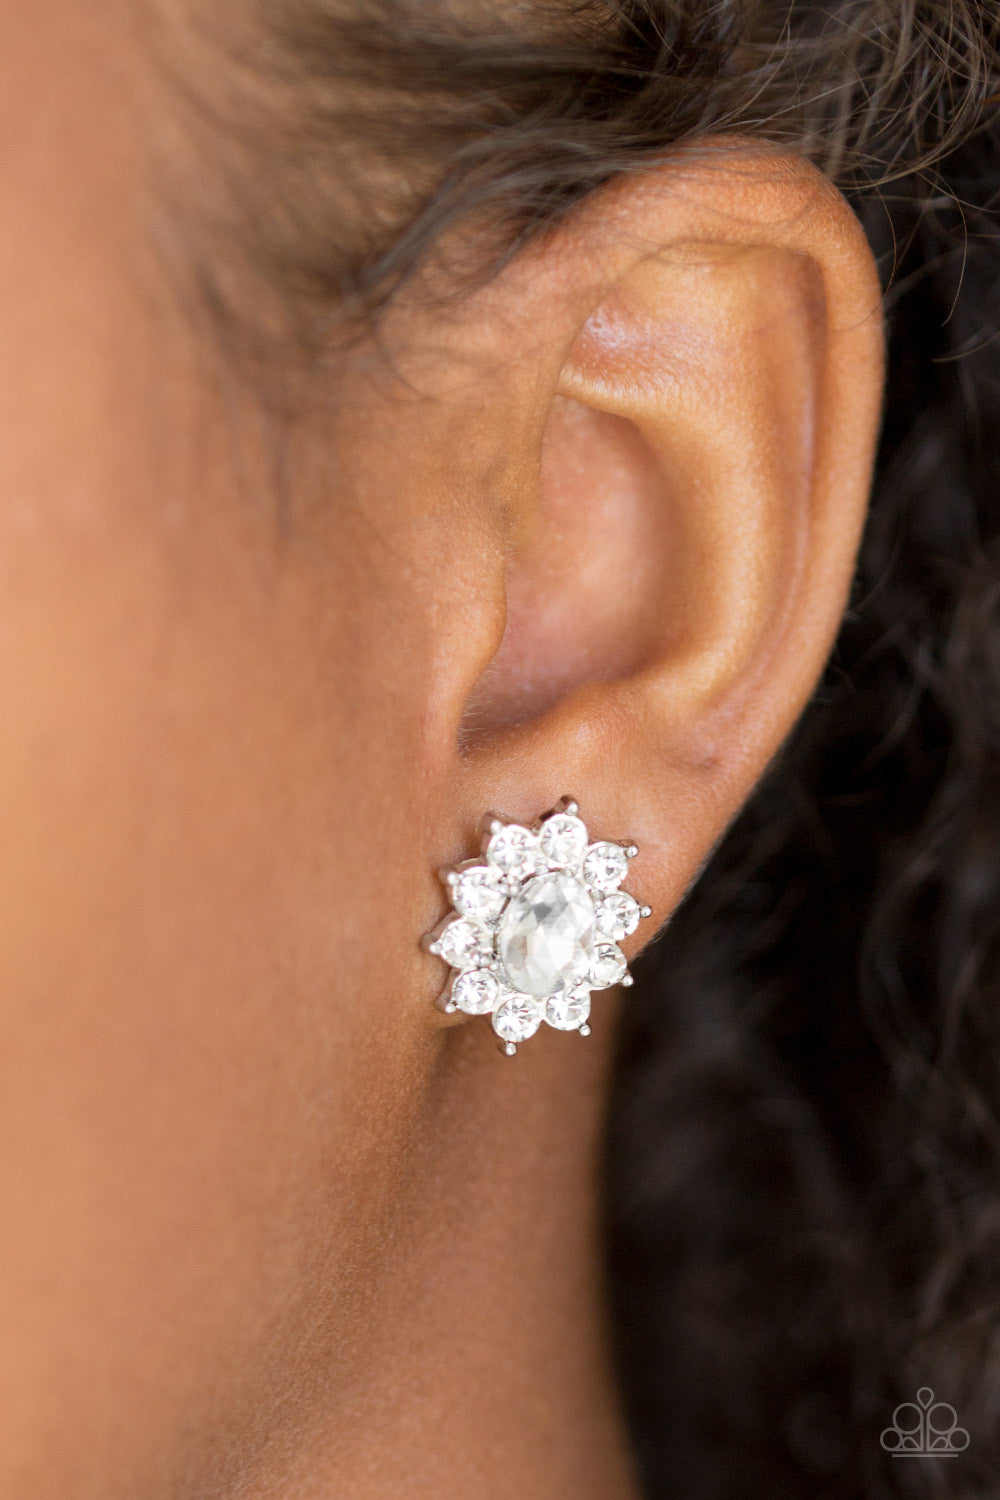 Starry Nights - White post earrings